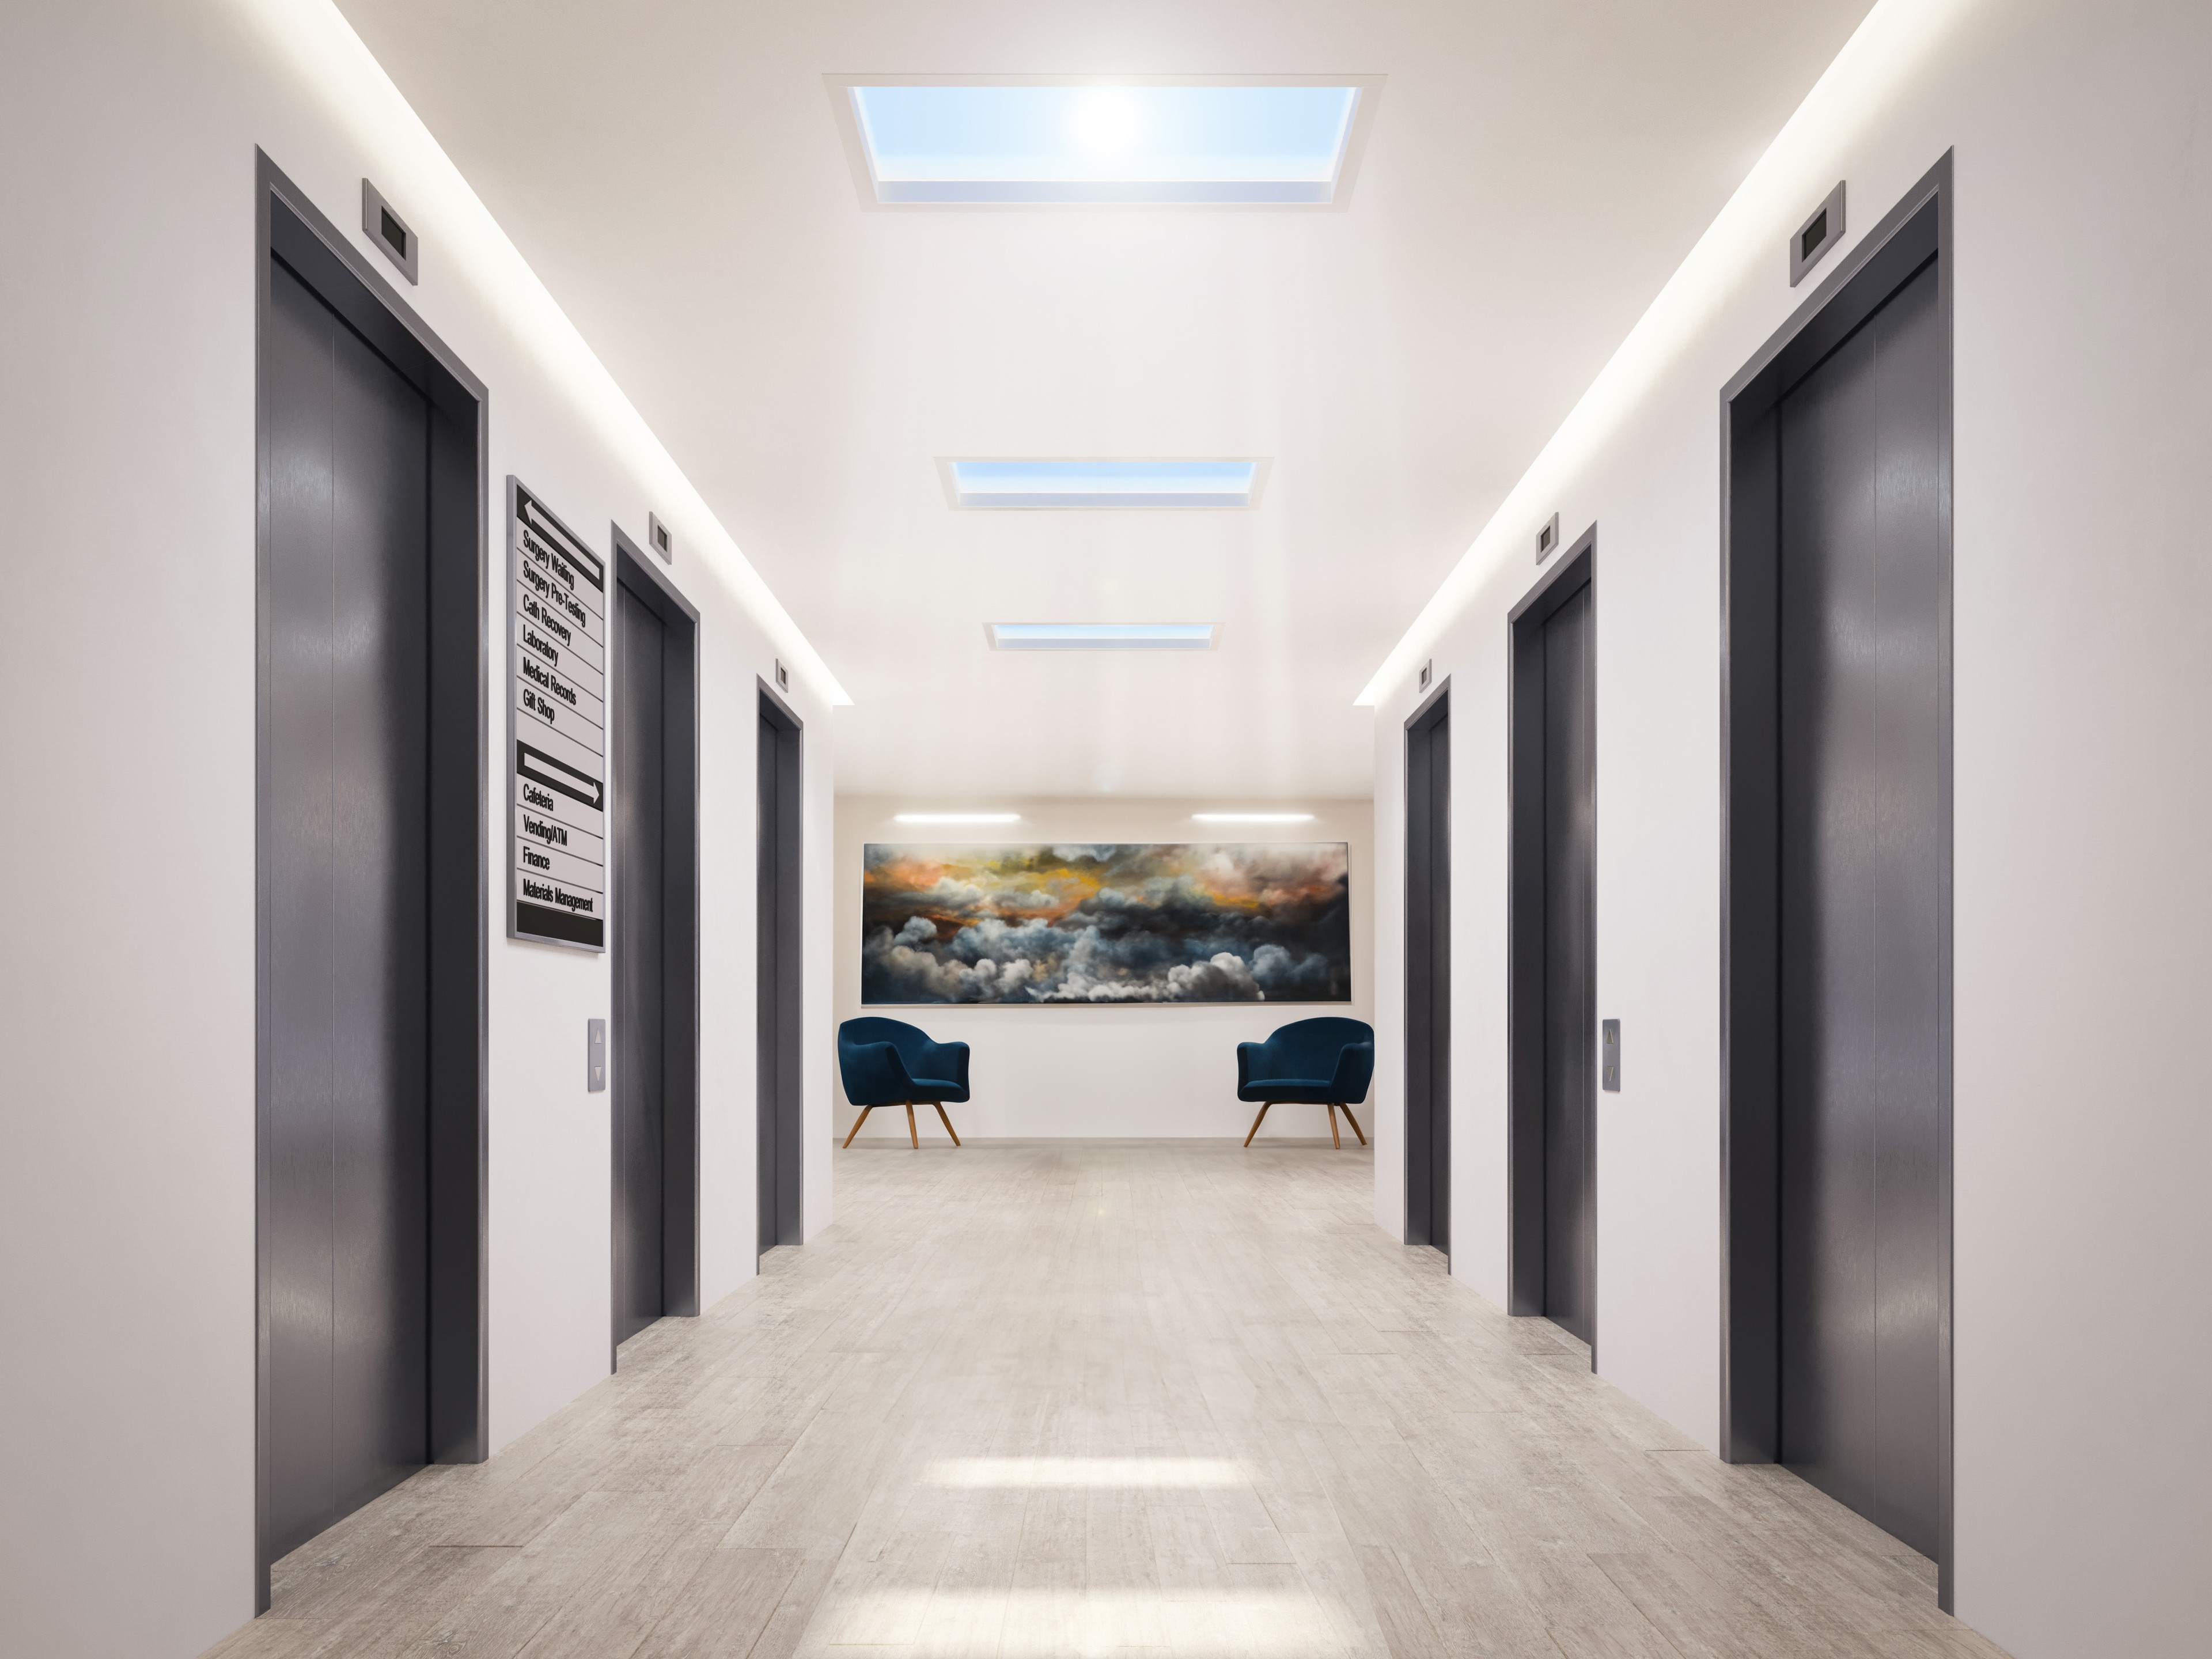 Innerscene Virtual Sun displayed in hallway of waiting room with elevators